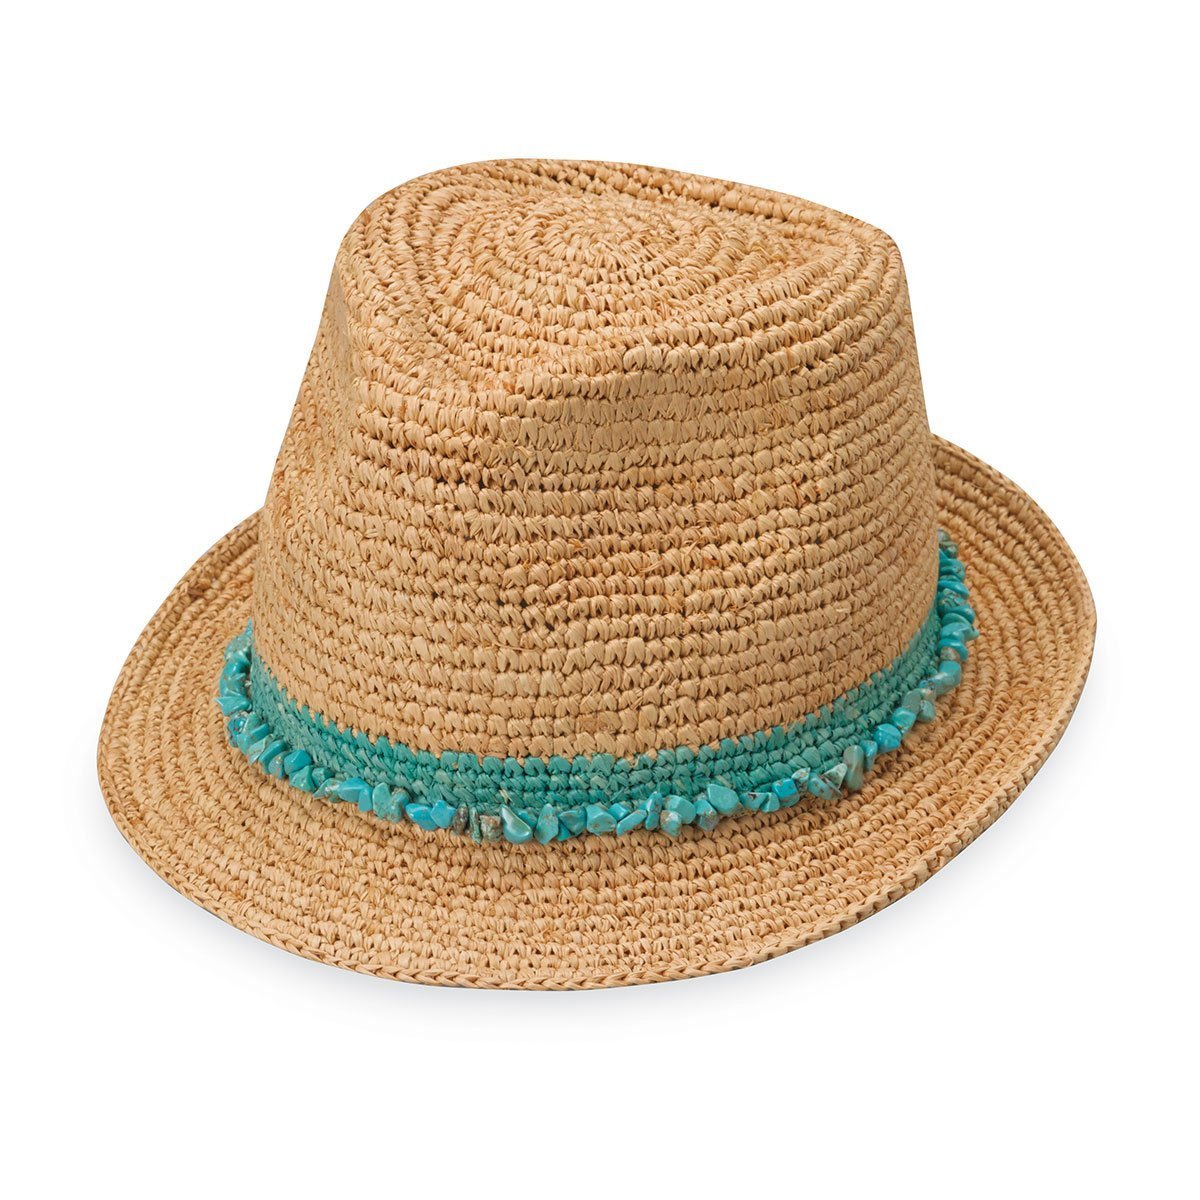 Featuring Front of Women's Adjustable Fedora Style Tahiti Raffia Sun Hat in Turquoise from Wallaroo